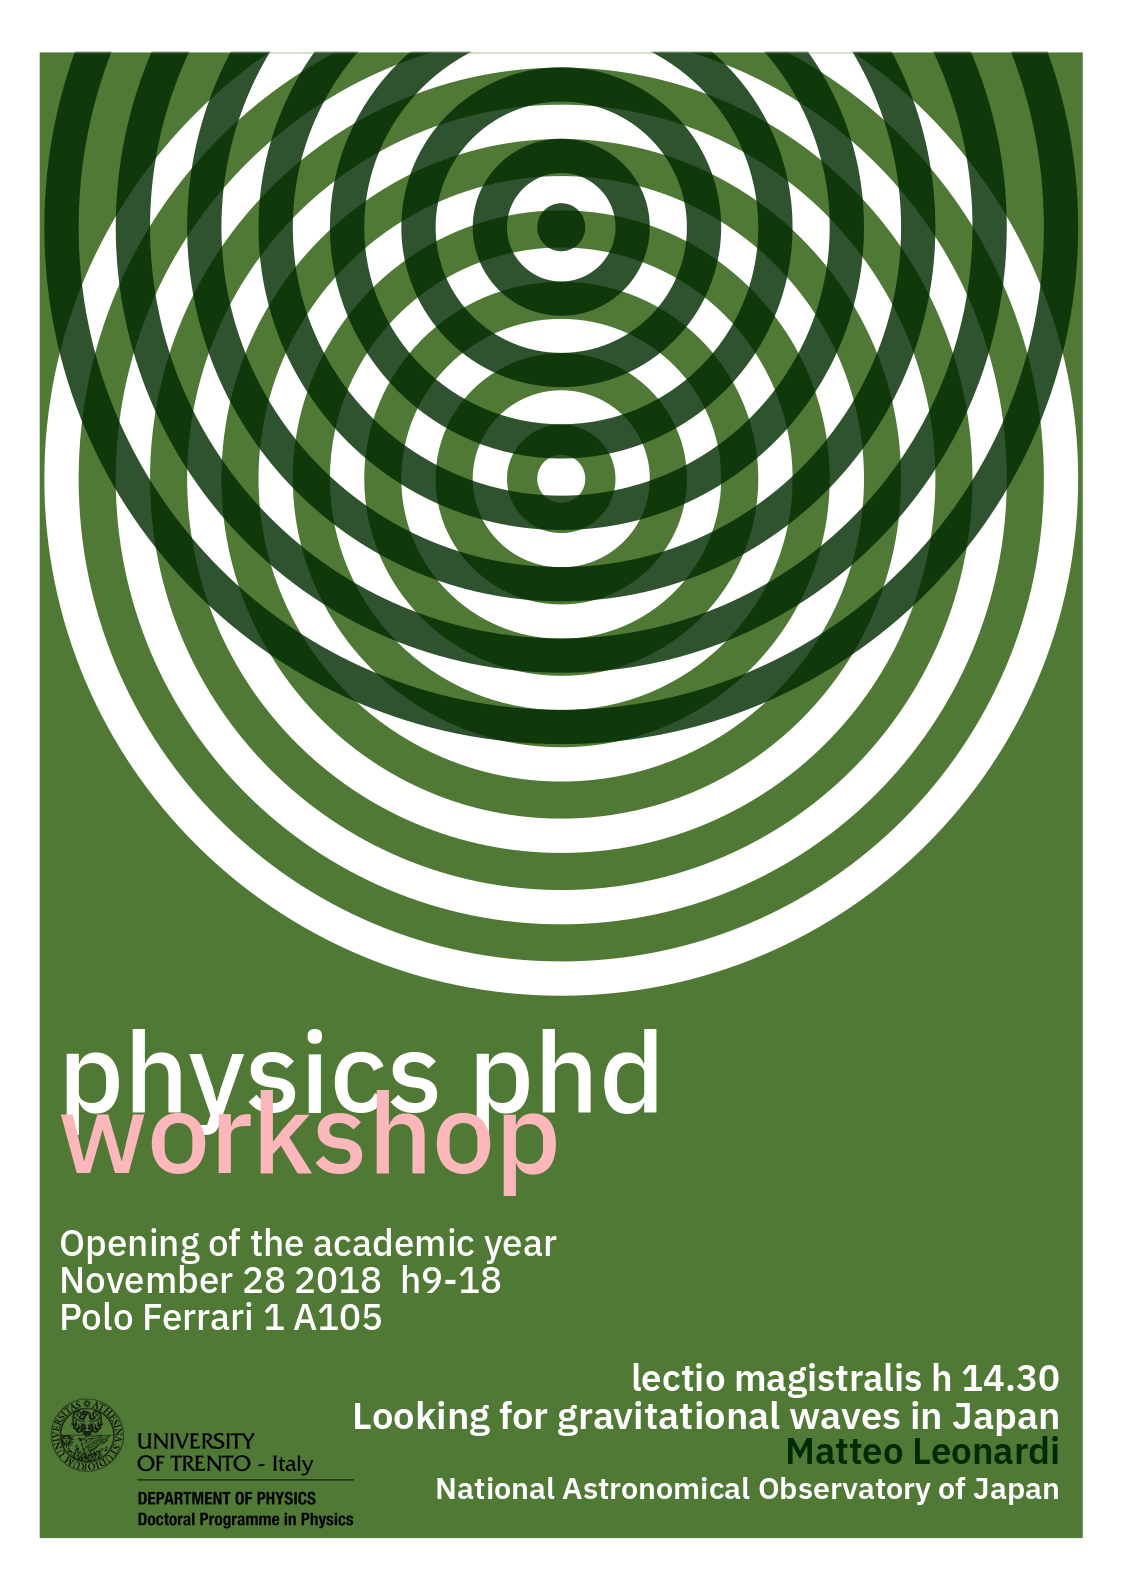 PhD Workshop poster 2018